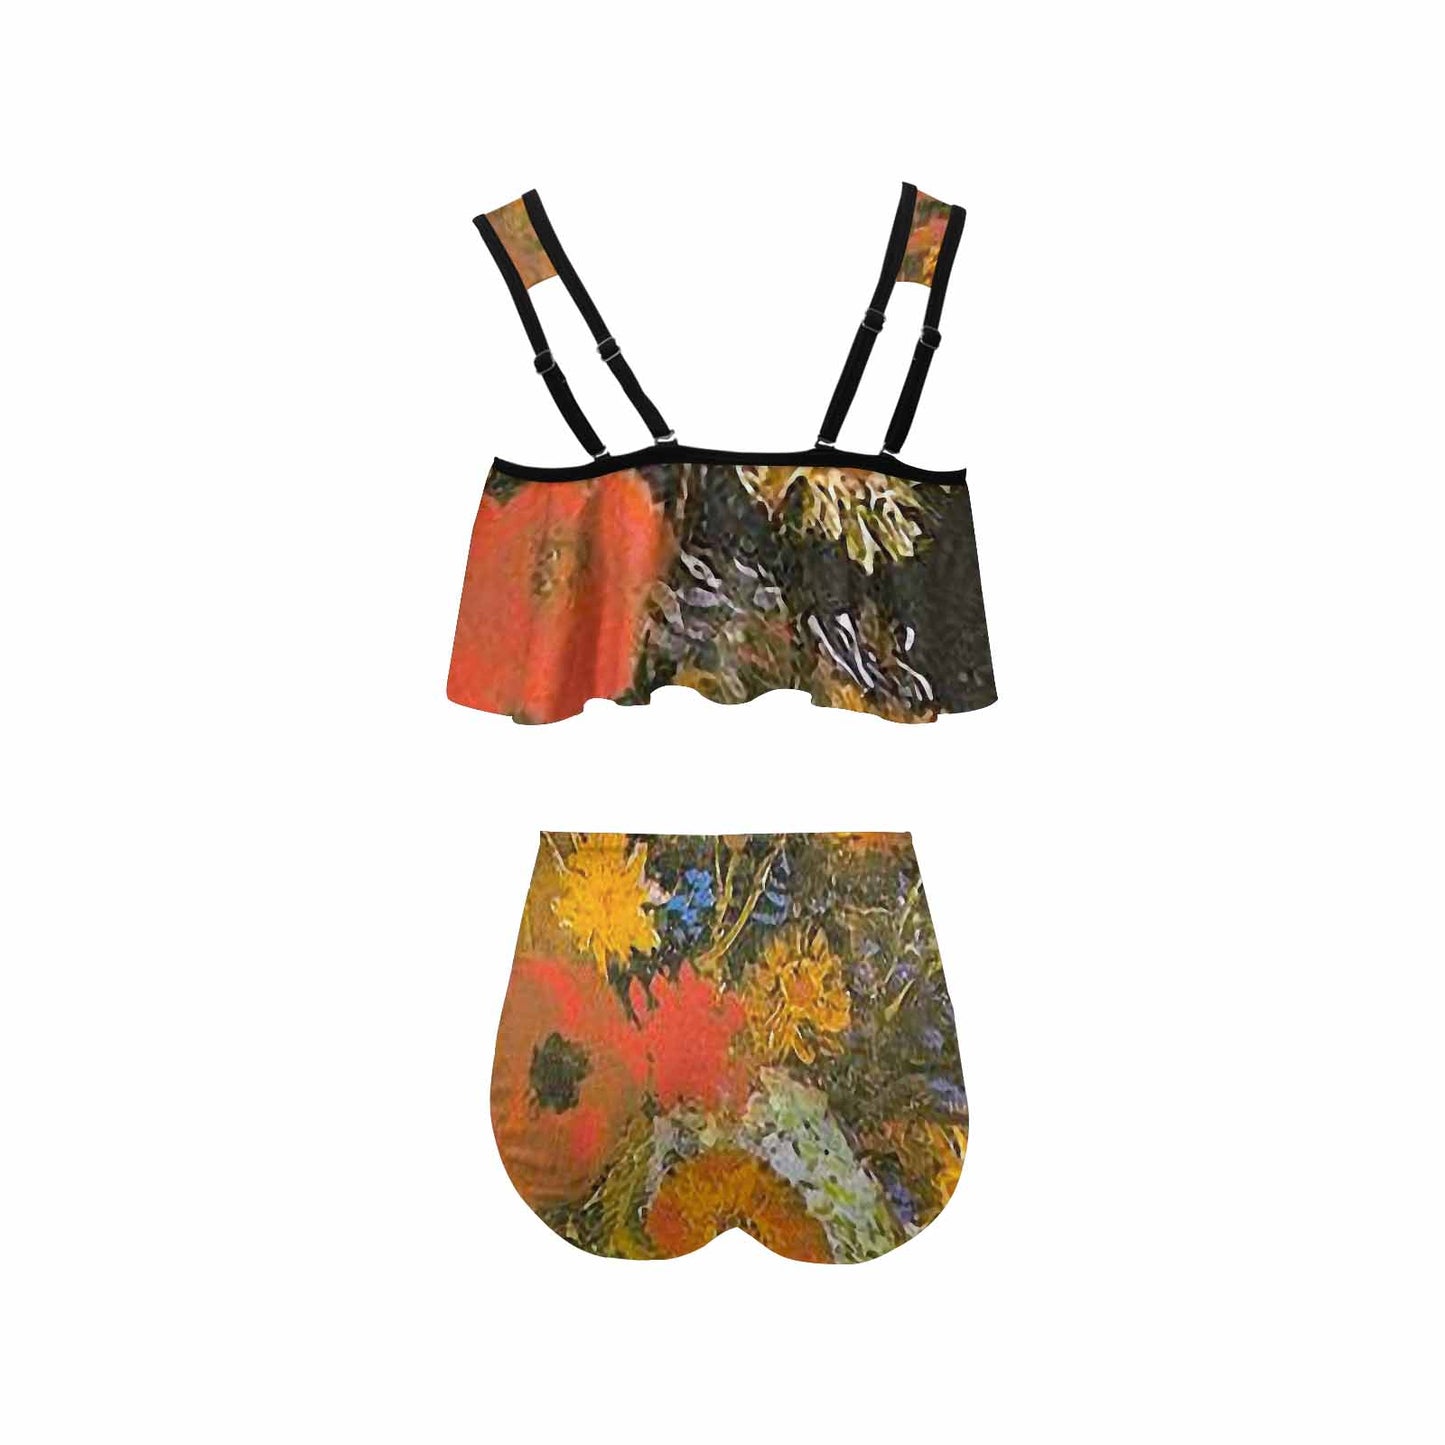 Vintage floral high waisted flounce top bikini, swim wear, Design 60